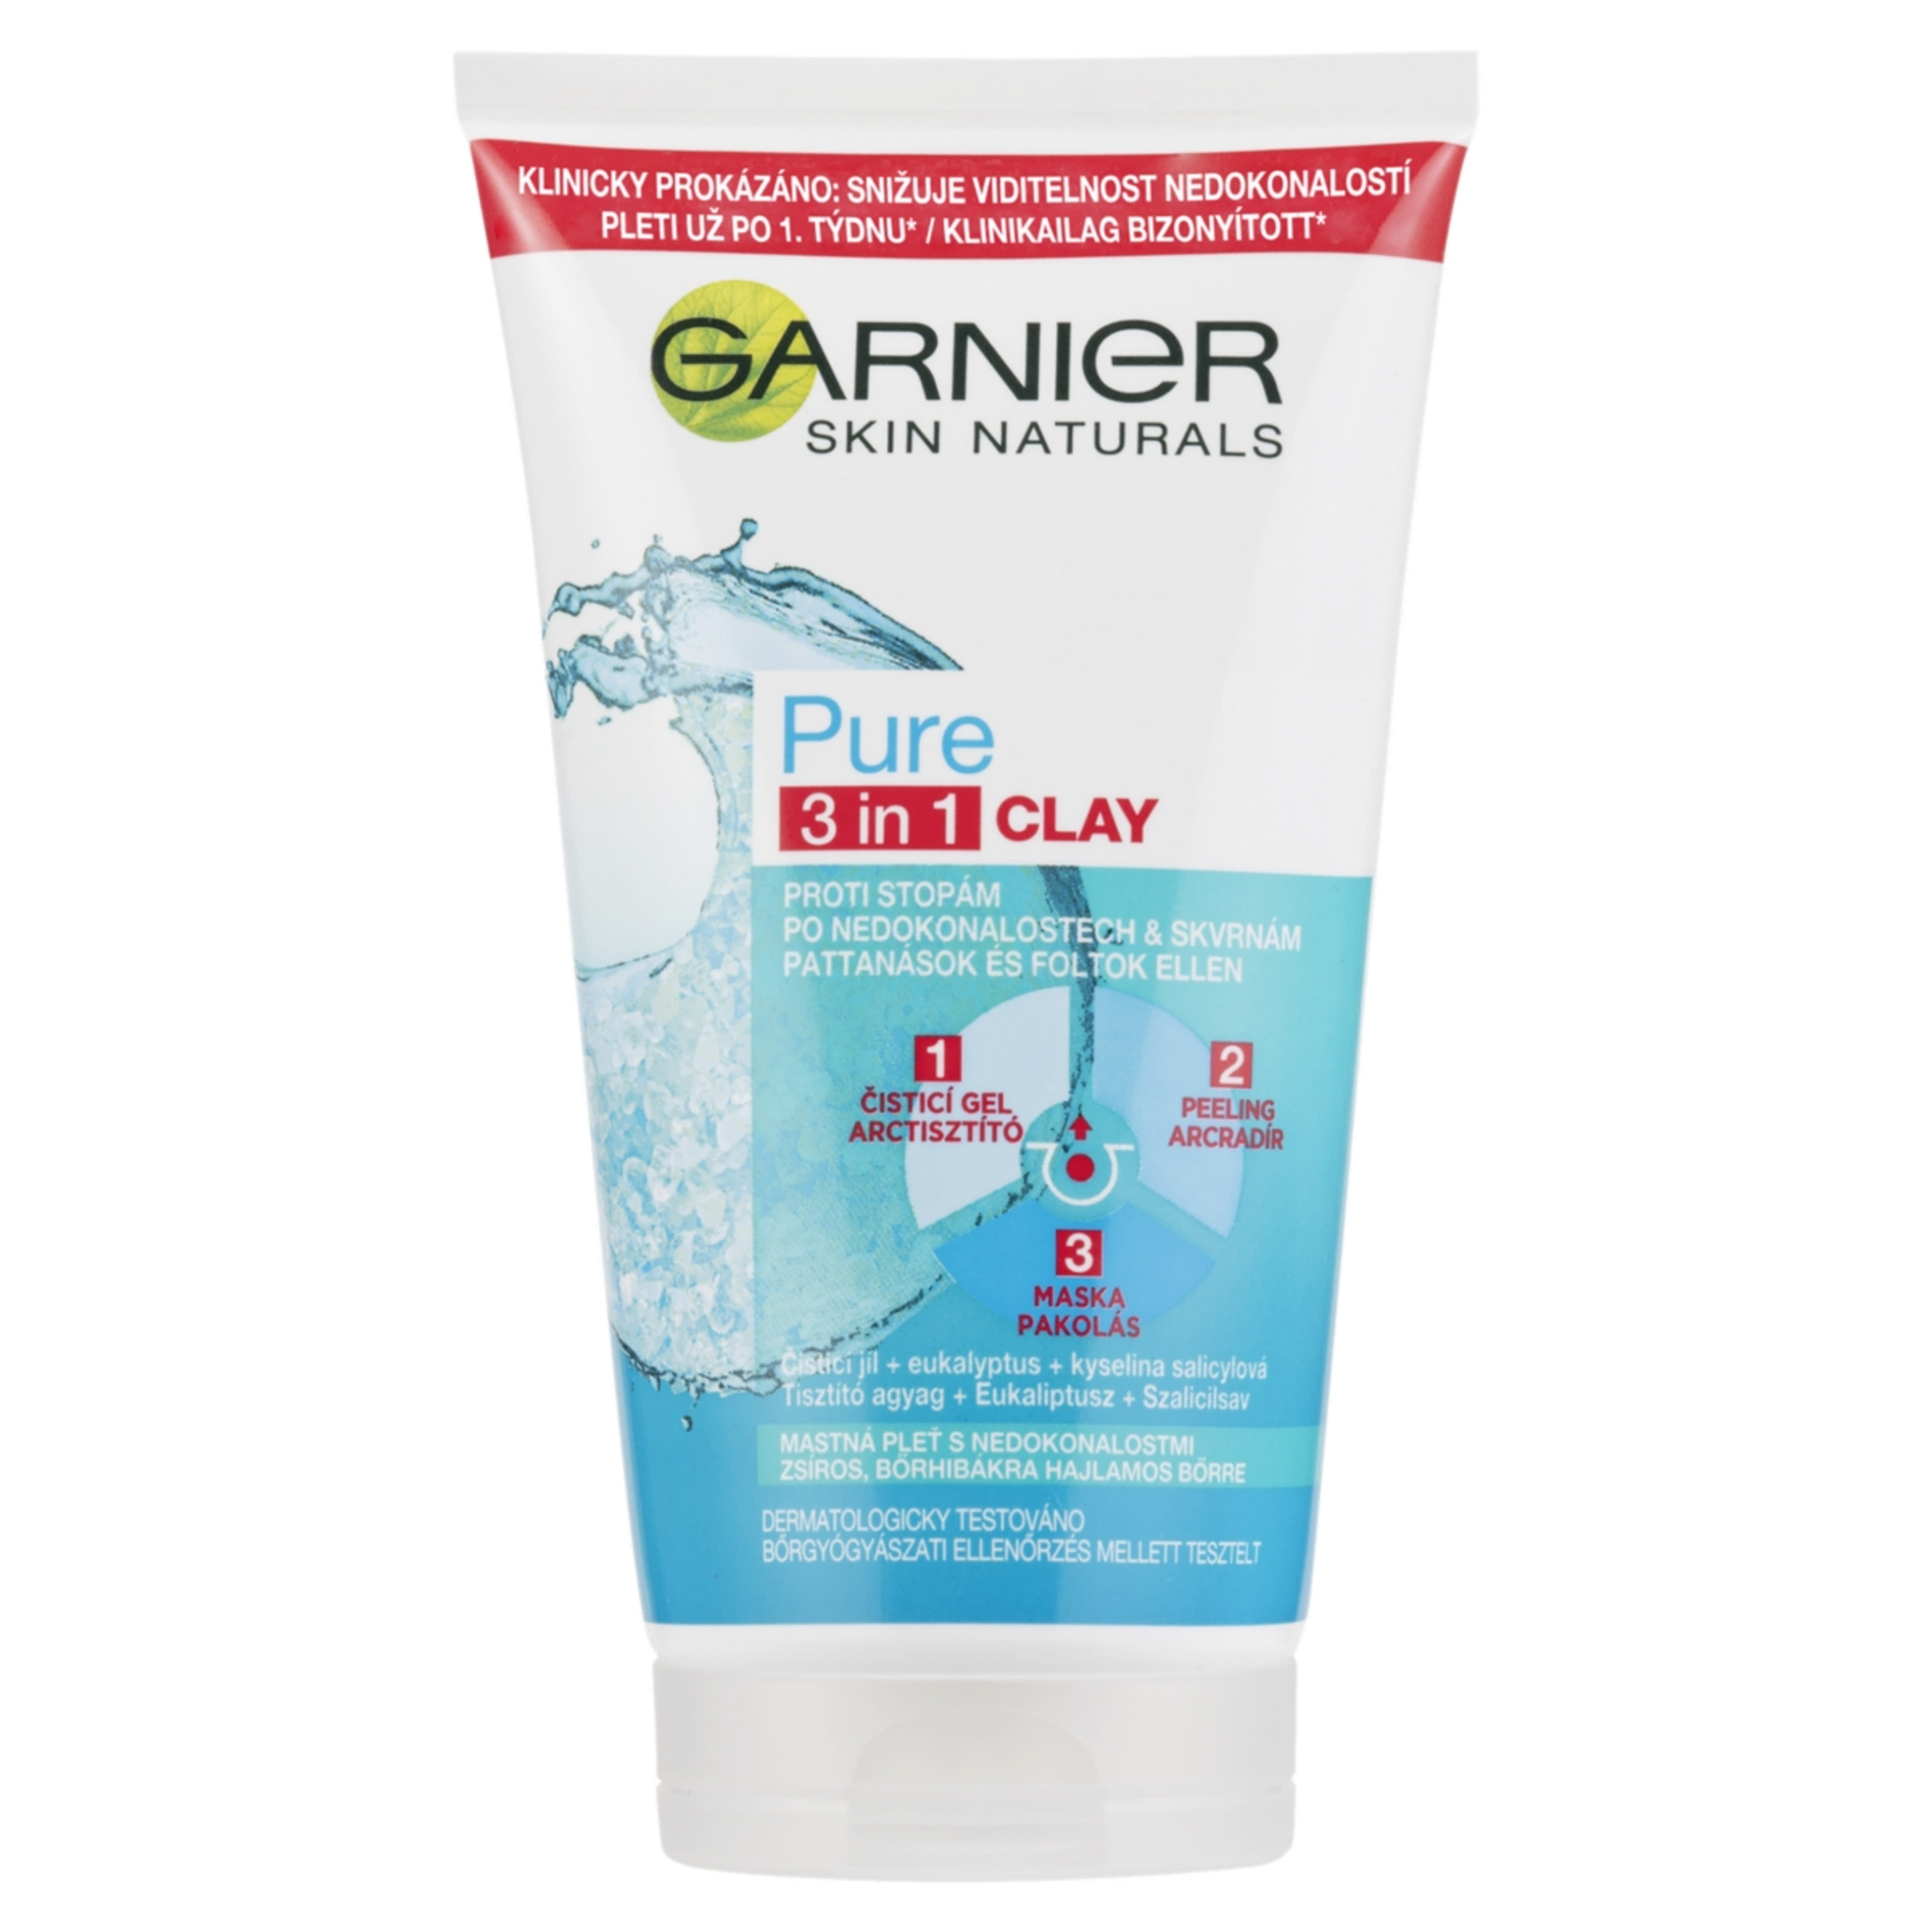 Garnier Skin Naturals Pure 3in1 mélytisztító gél tubus - 150 ml-1